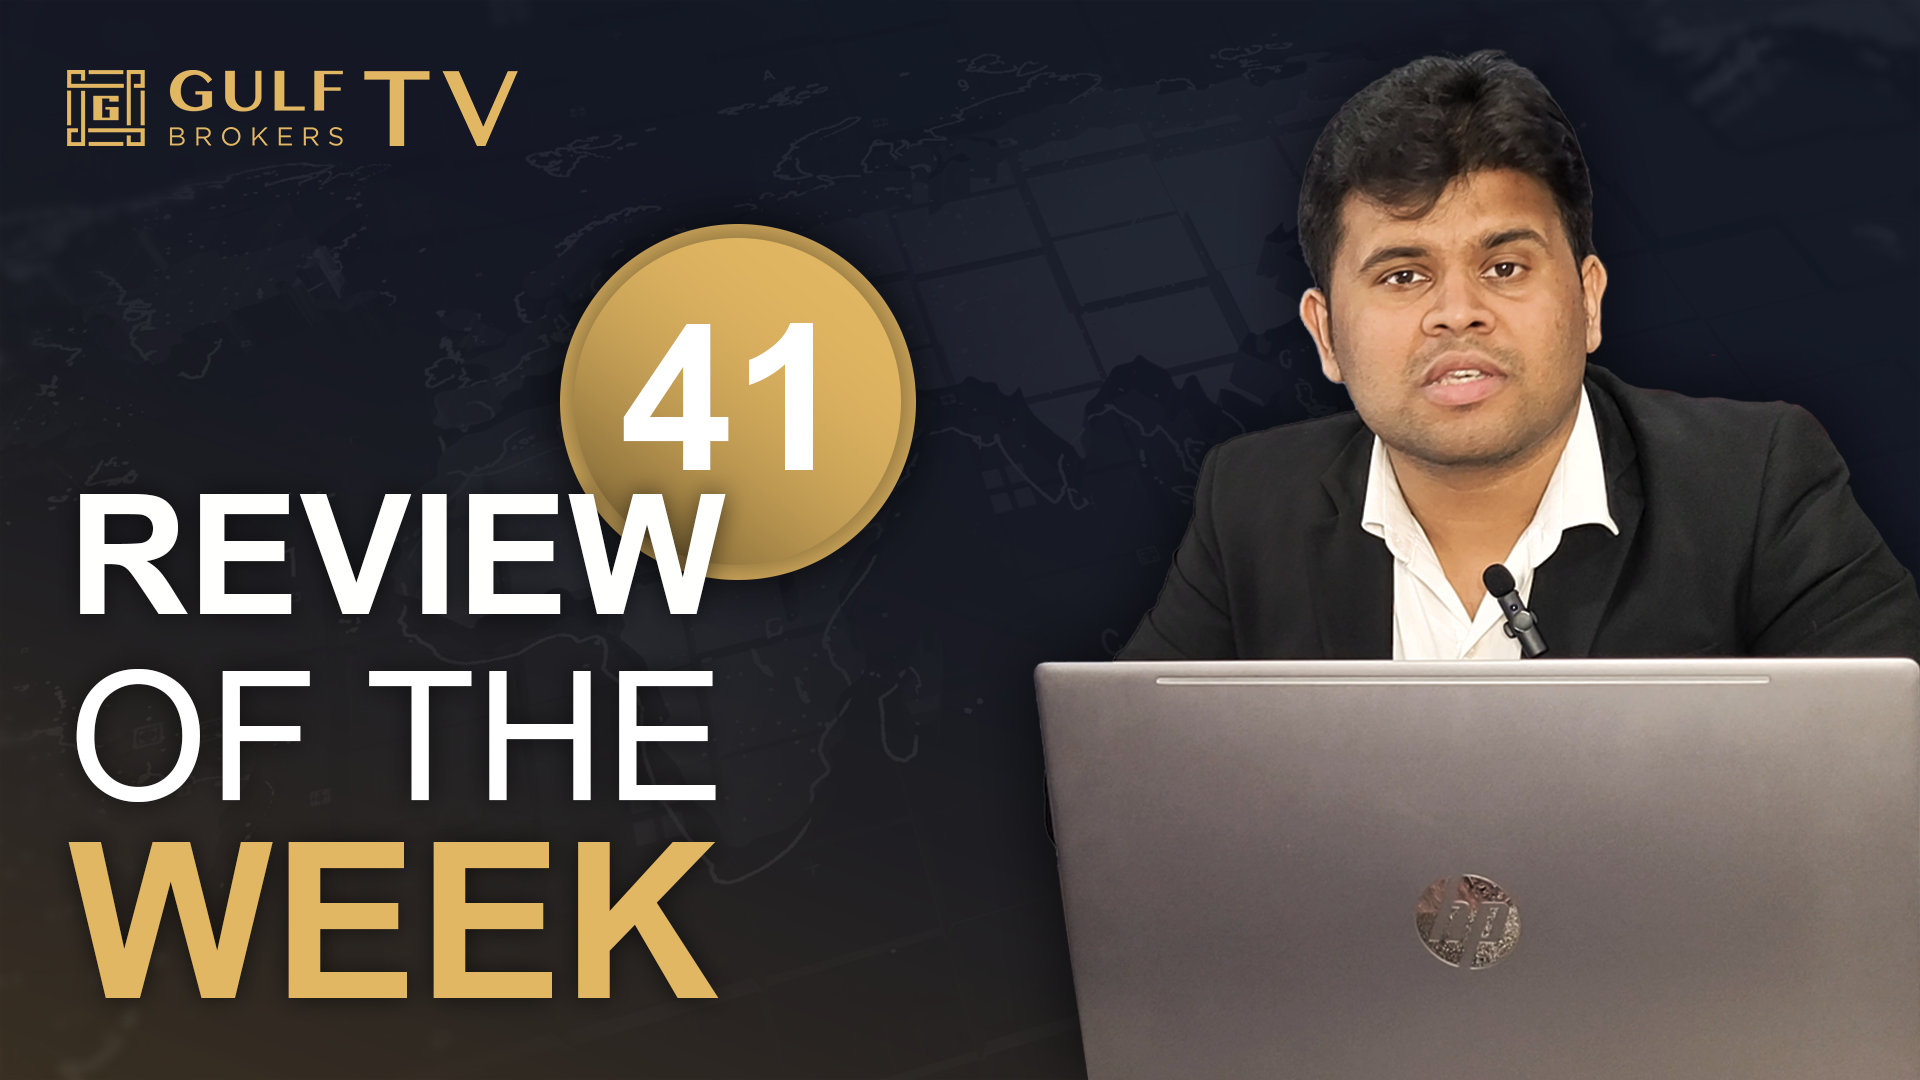 Gulfbrokers | Gulf Brokers | Review of the week 41 | Syam KP